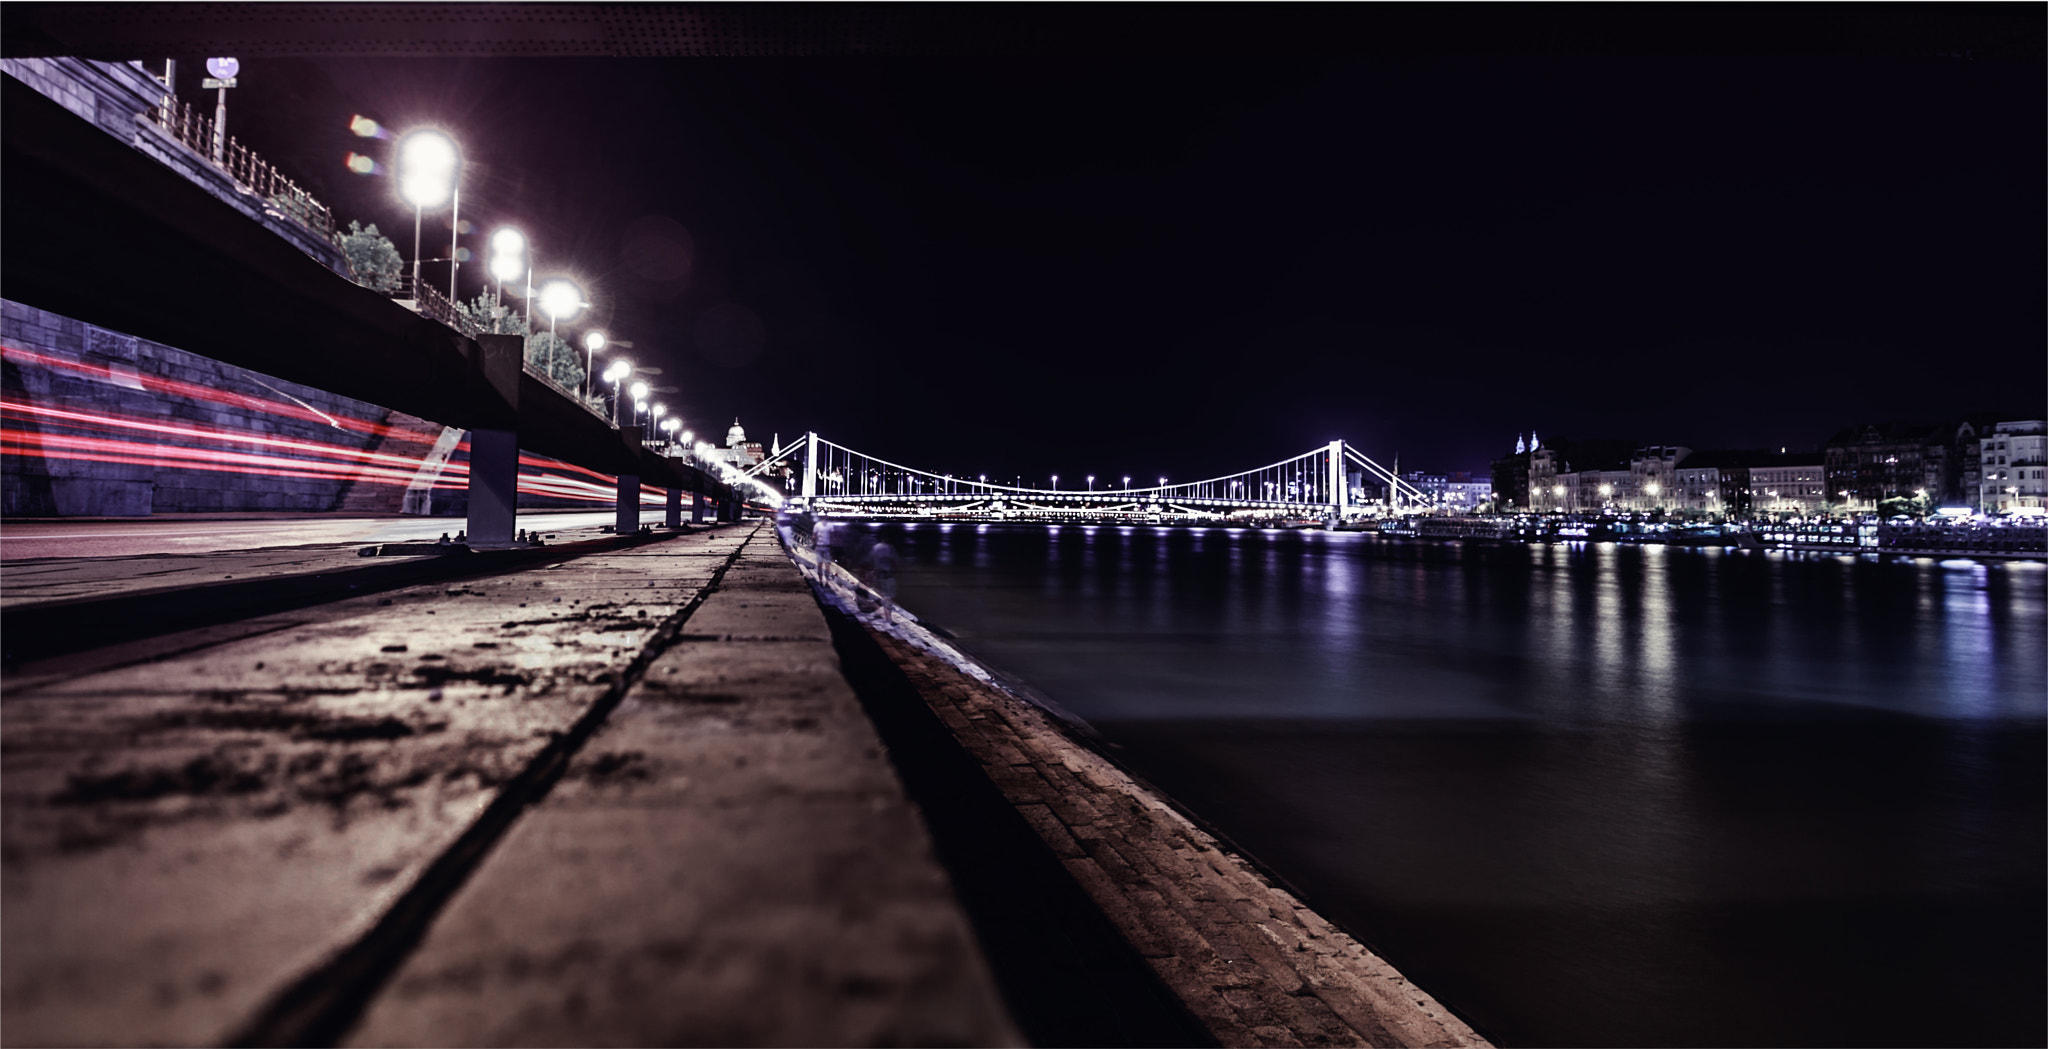 Budapest Nightlife - bridge above the river